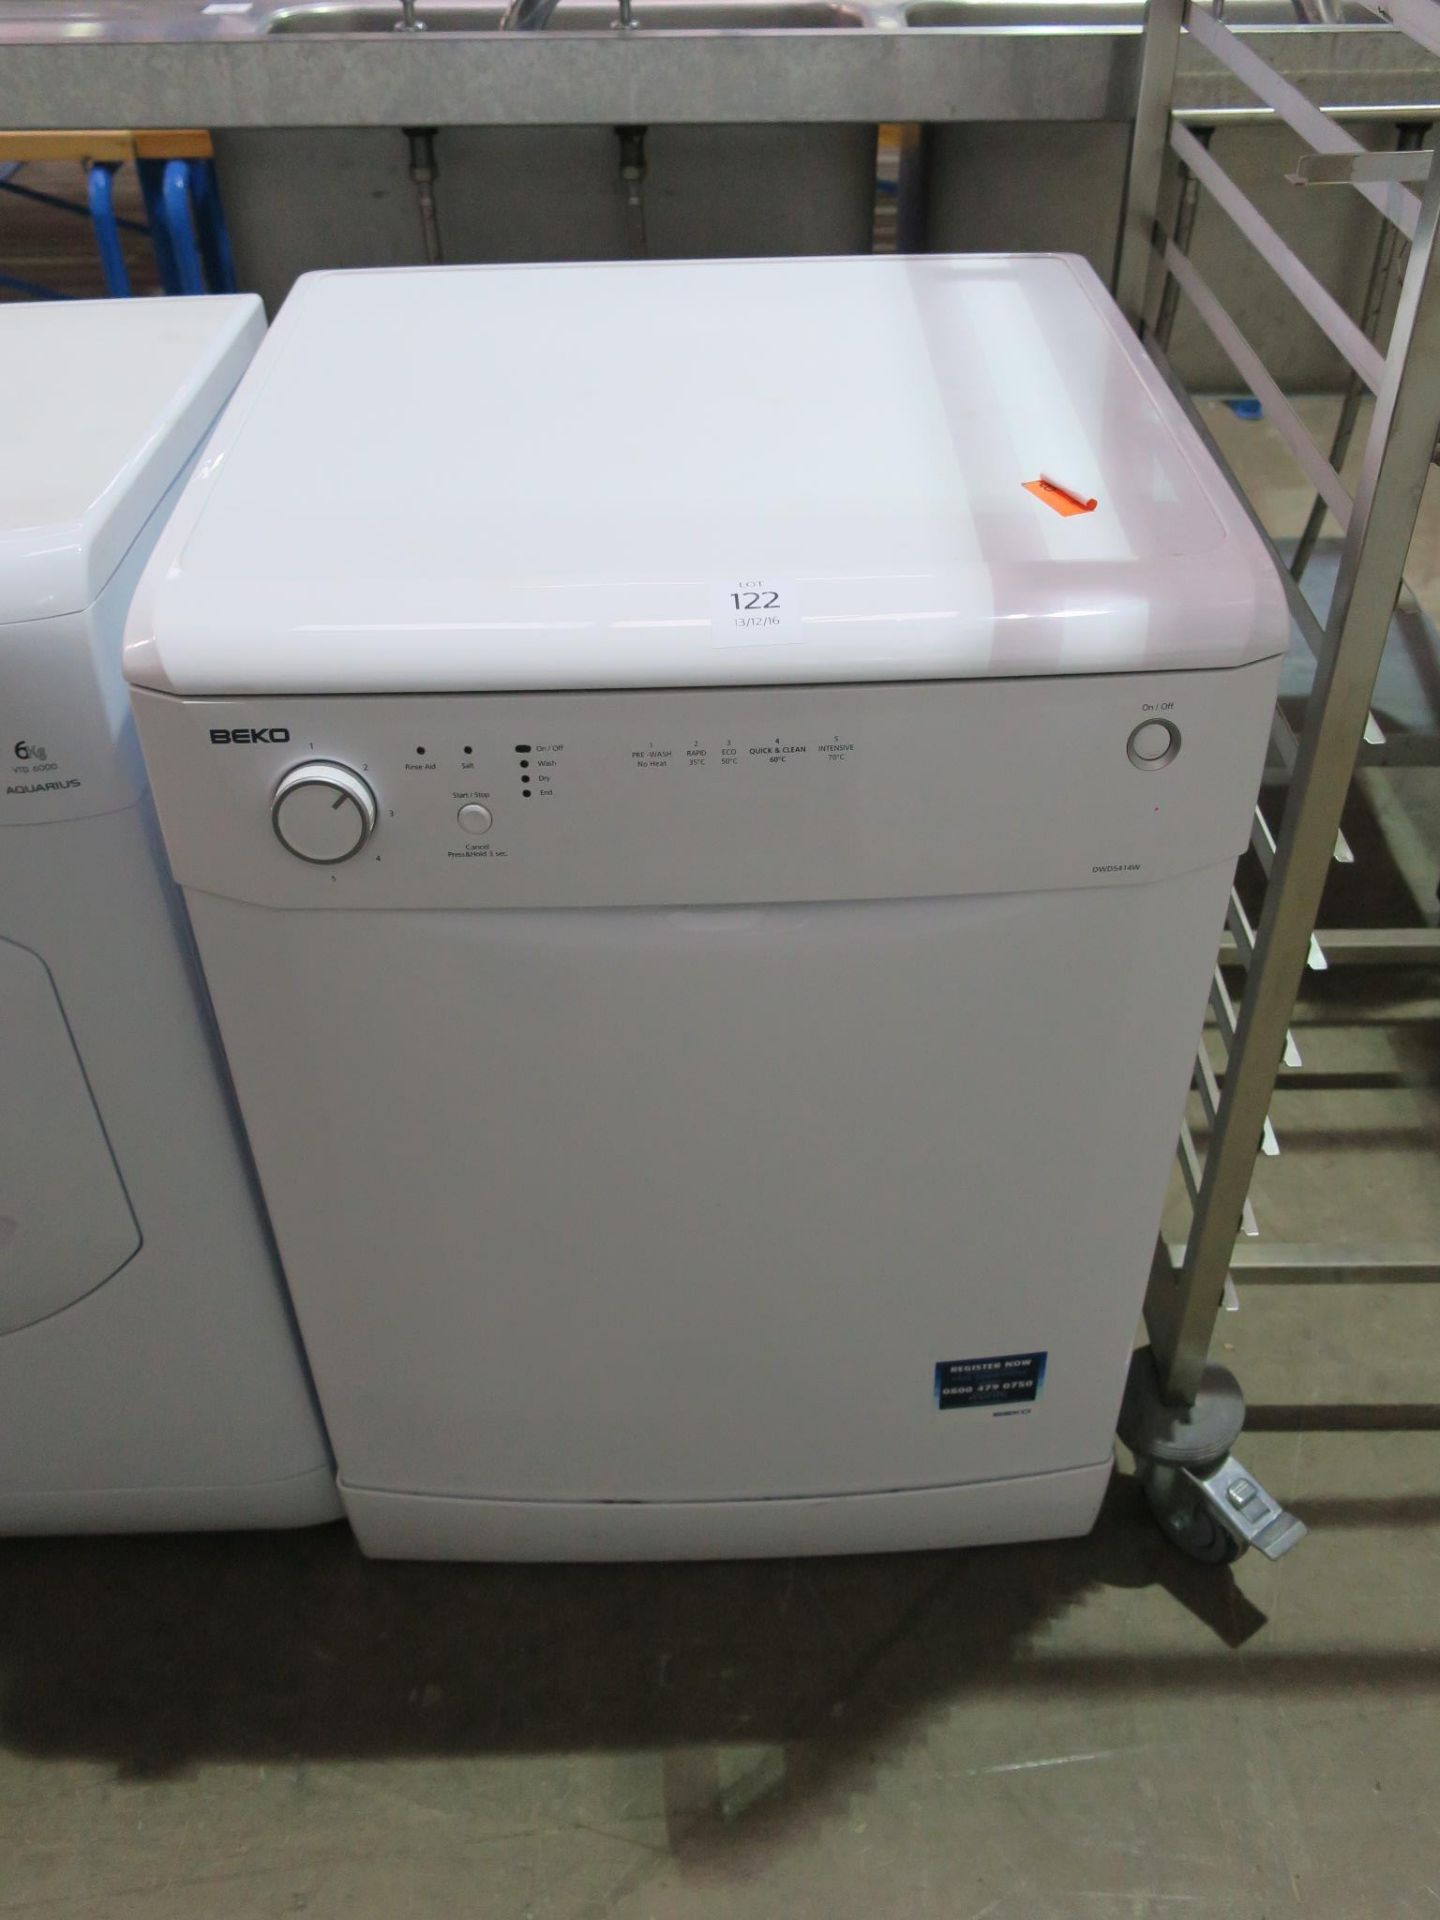 A Beko DWD5415W dishwasher